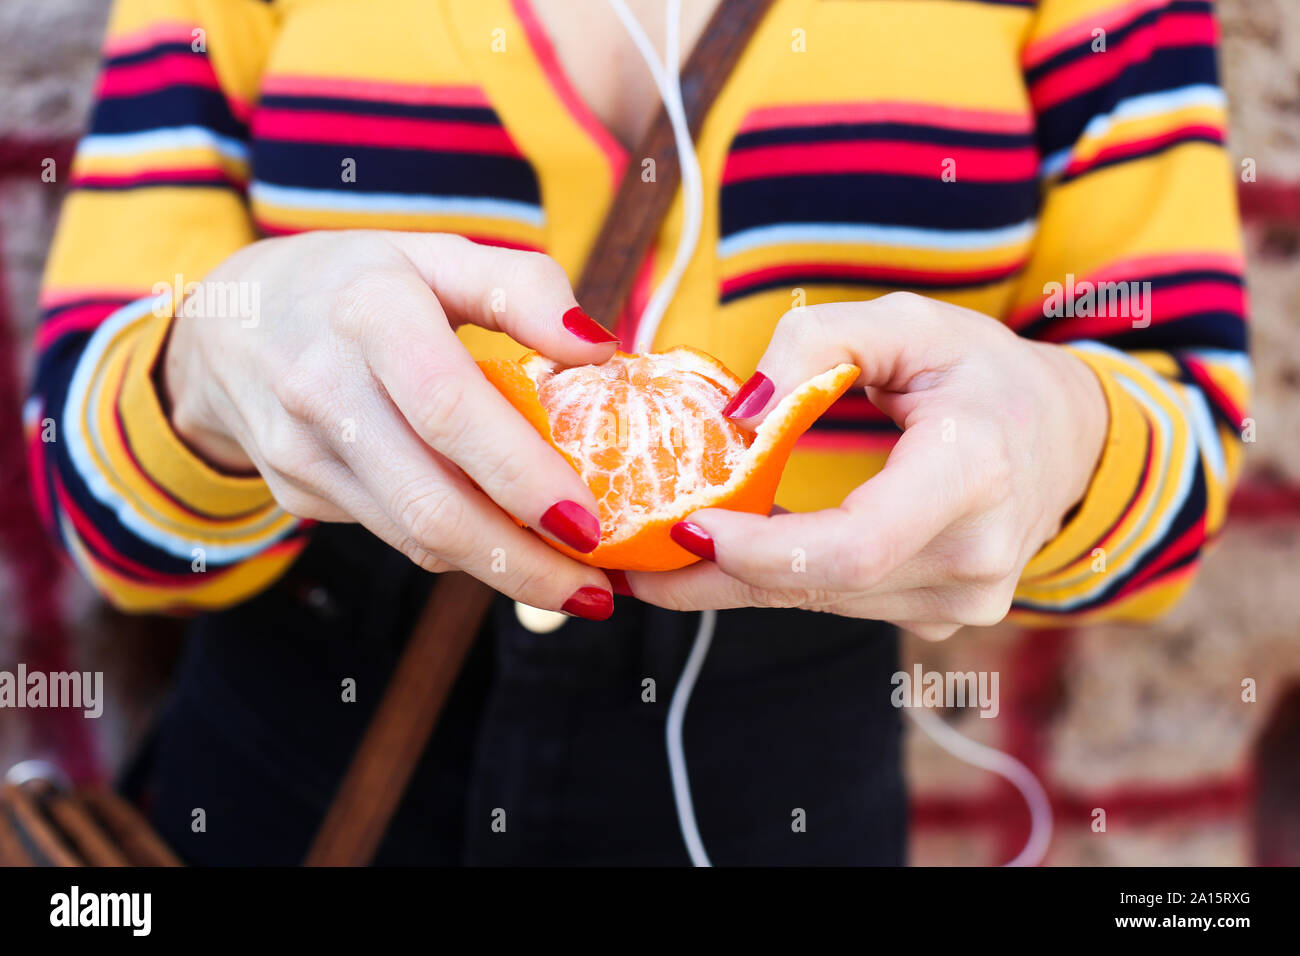 Woman's hands peeling tangerine, close-up Stock Photo